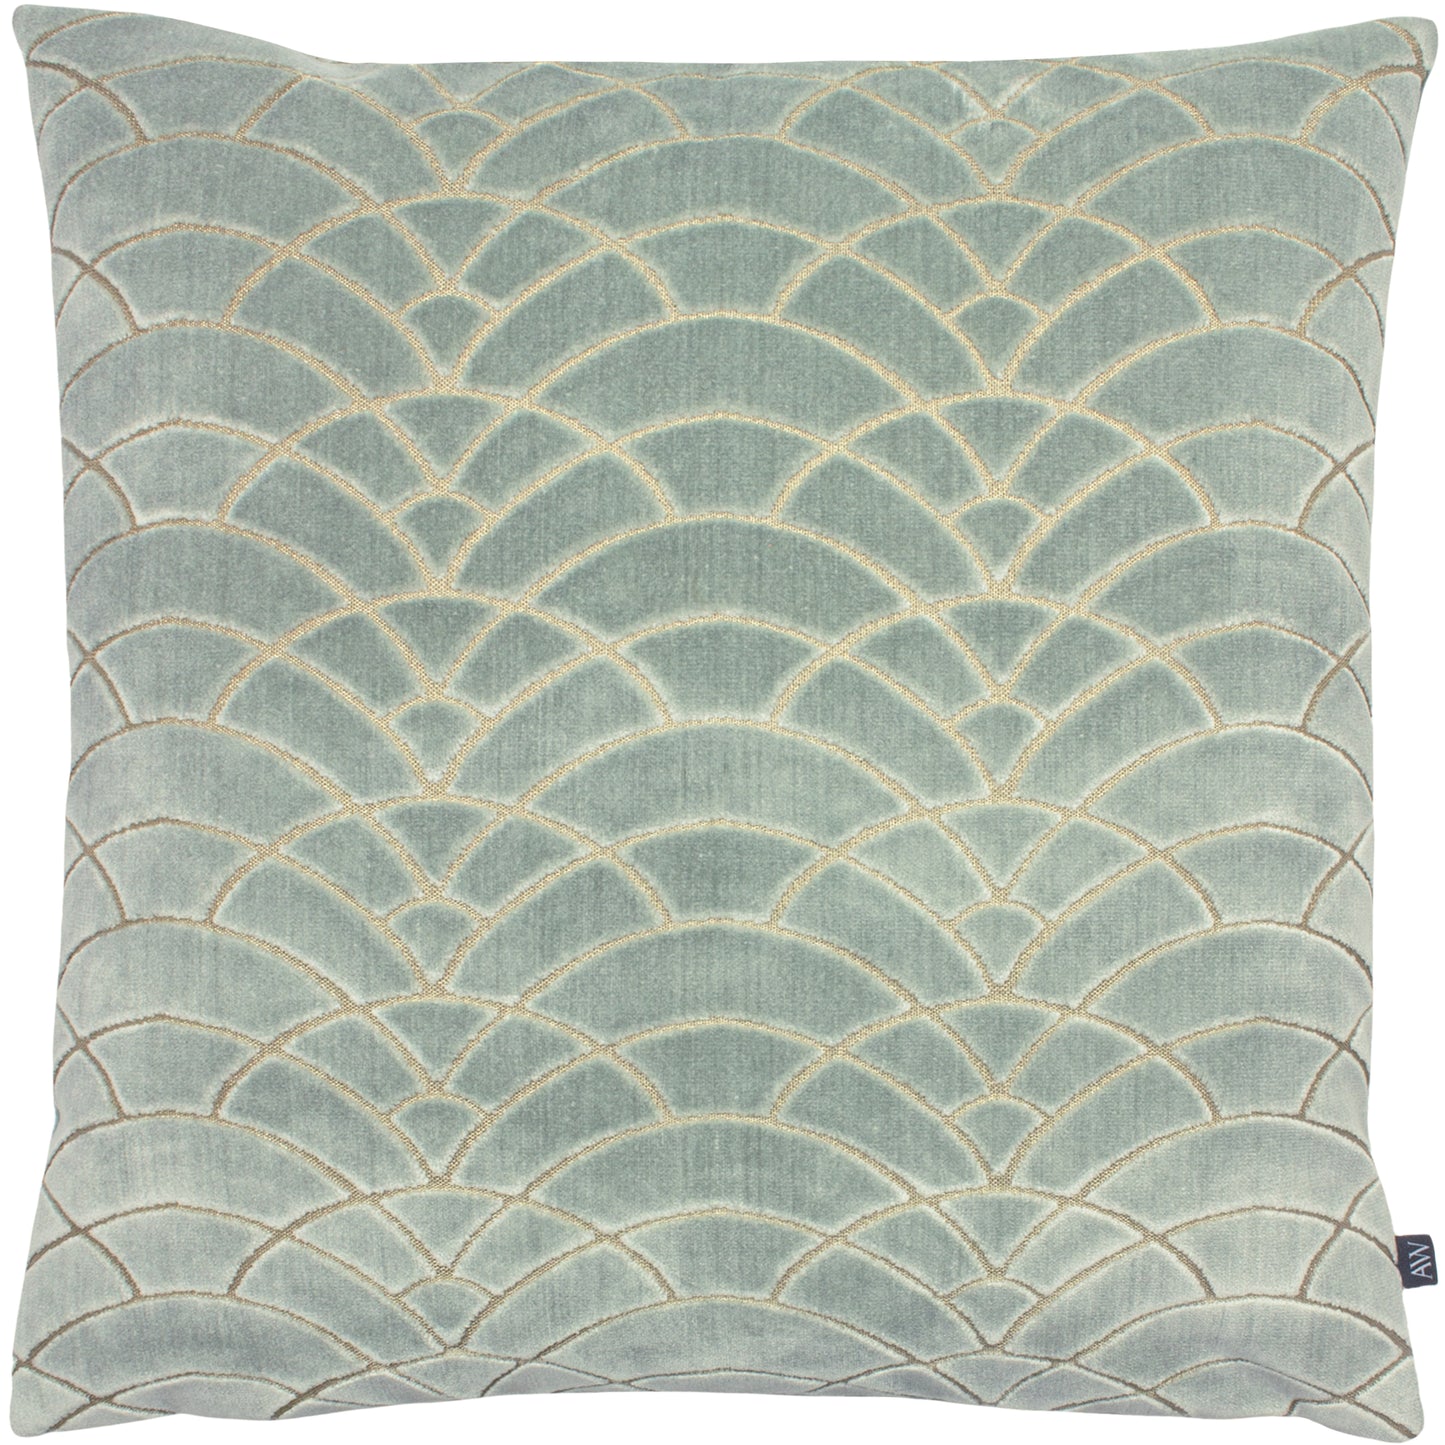 Decorative Indoor Cushion "Dinari" - ON SALE NOW!